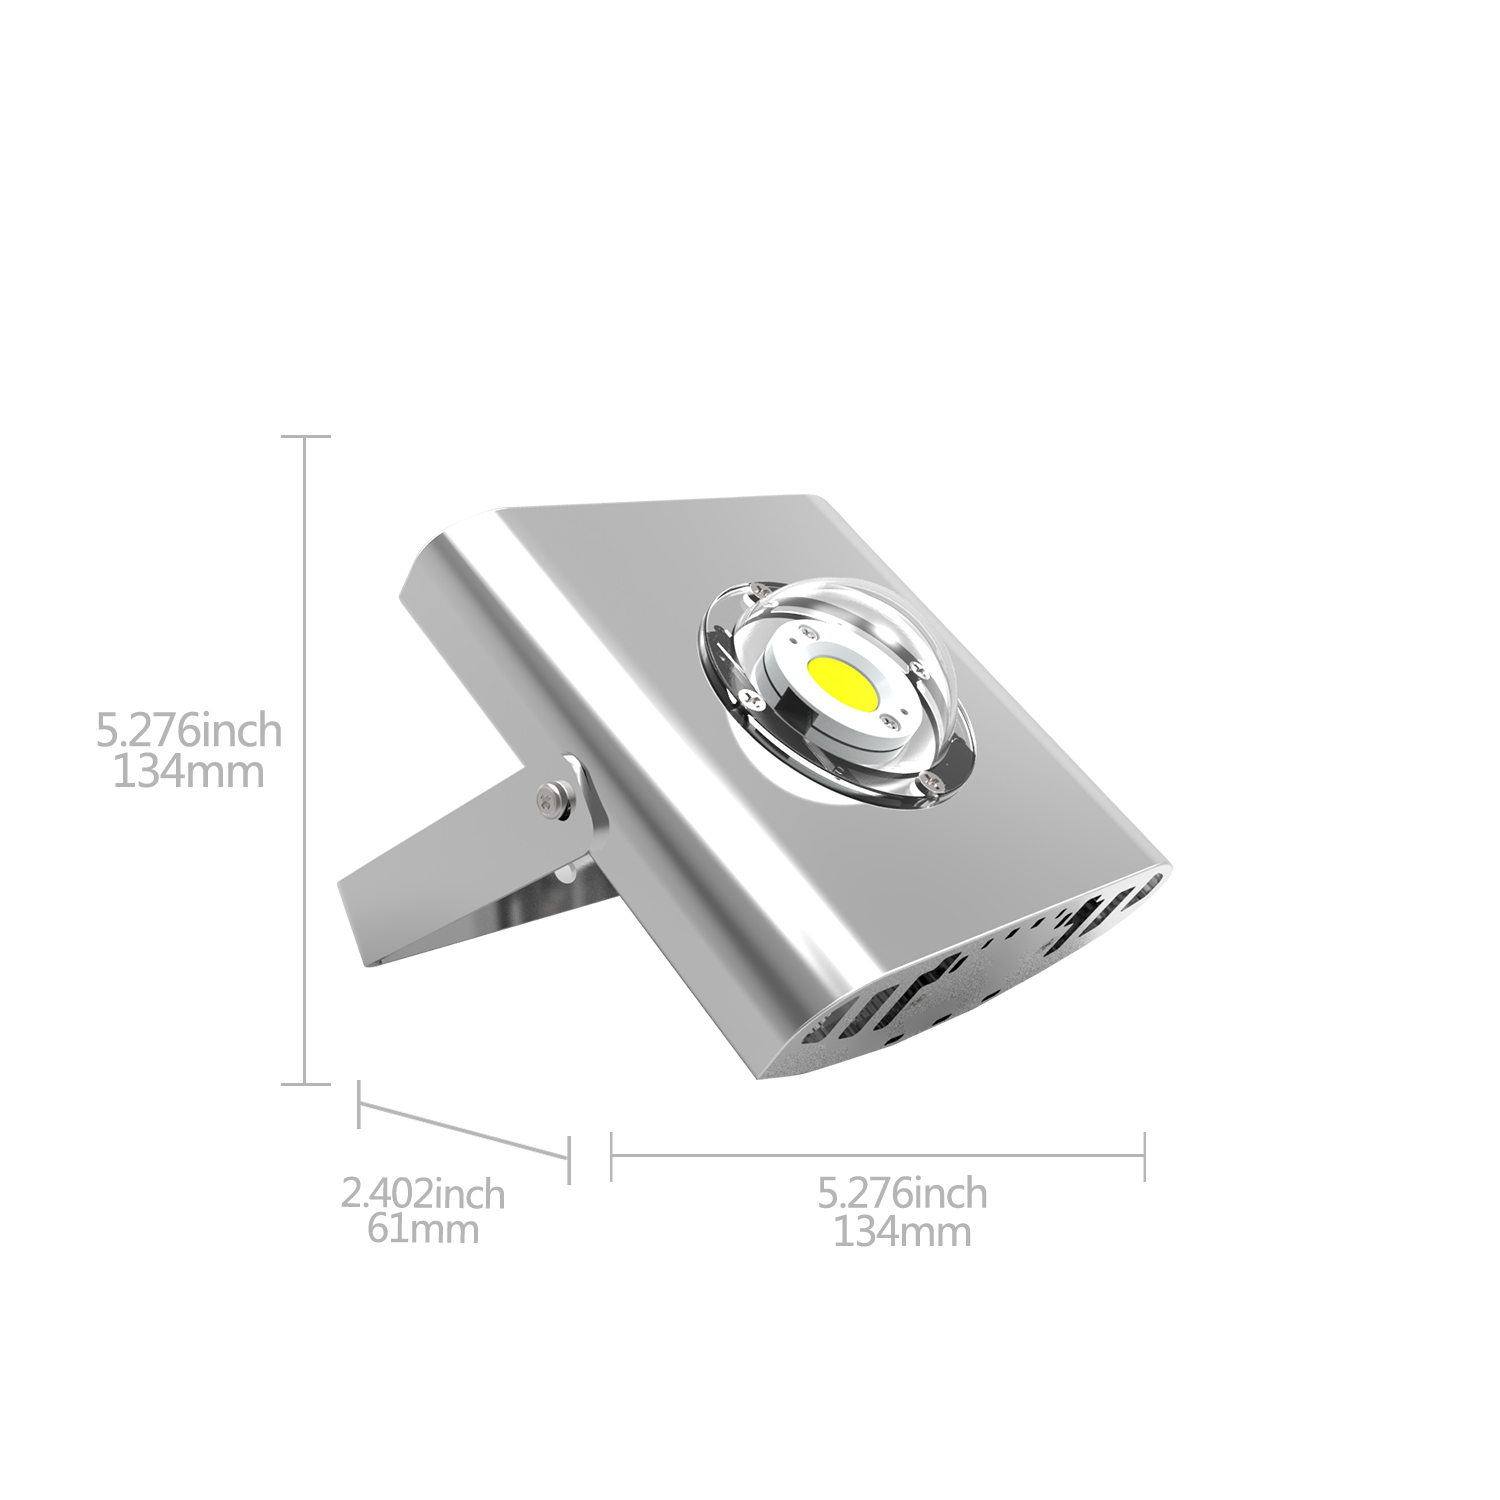 Aigostar - Confezione da 2 Faretto a LED COB，30W, 2700LM，Impermeabile IP65, Luce Naturale 4000K[Classe di efficienza energetica A+]